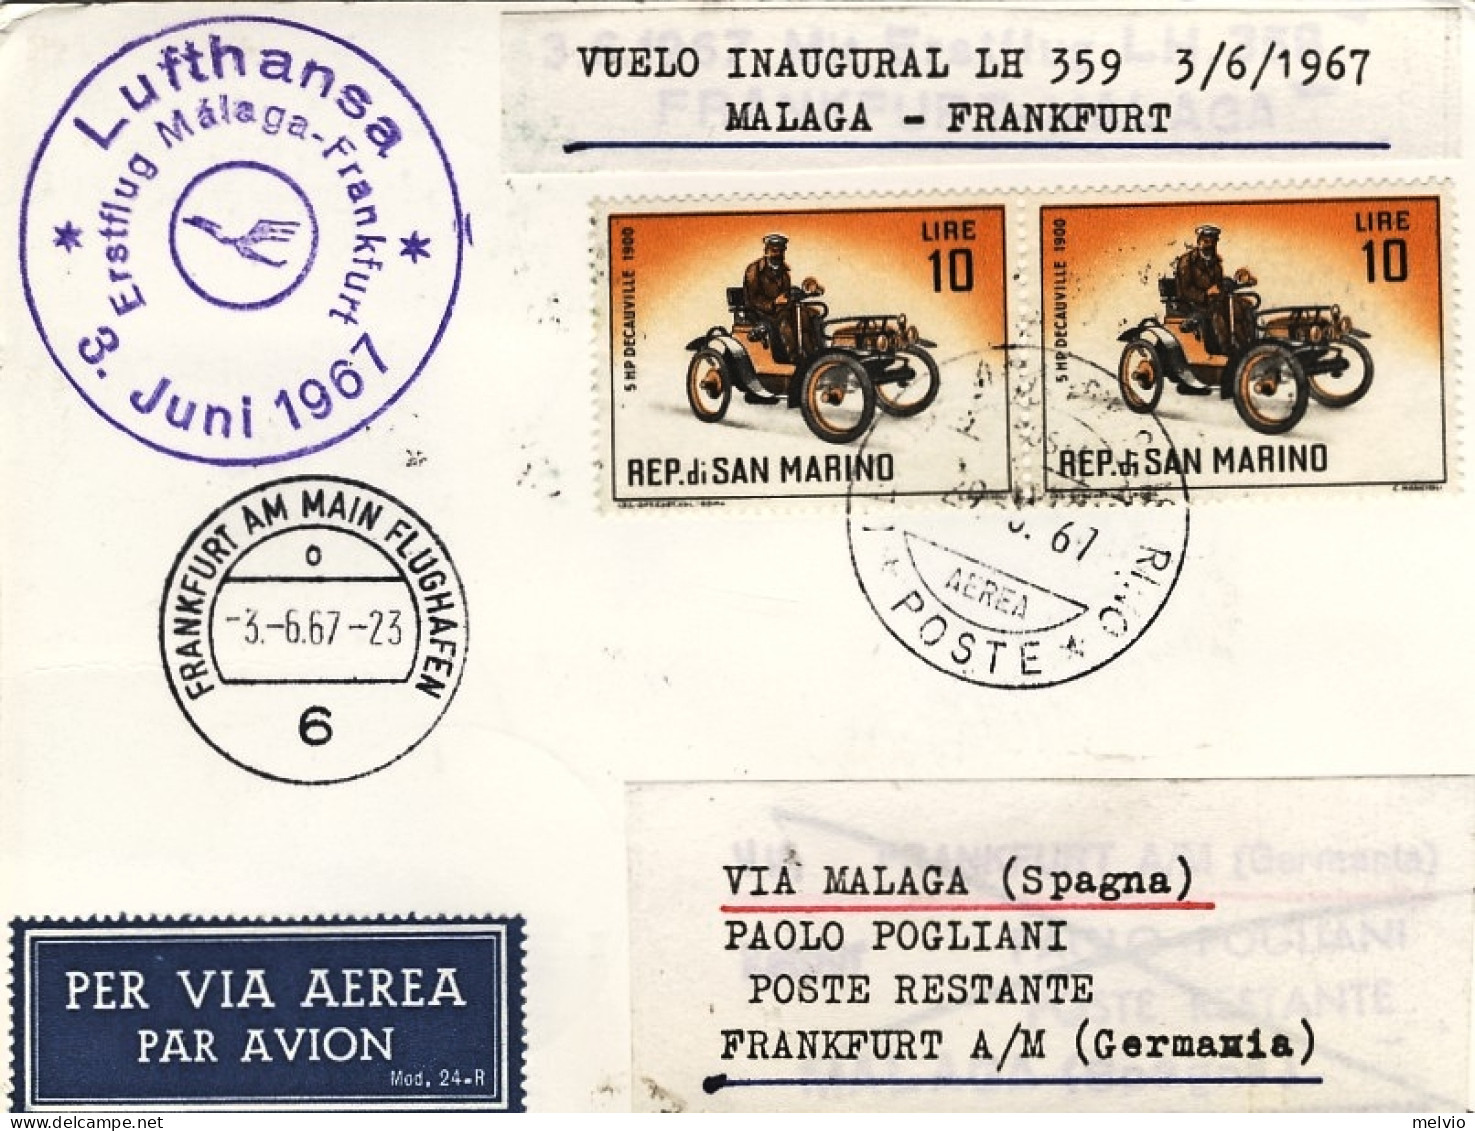 San Marino-1967 I^volo Lufthansa Malaga (Spagna) Francoforte - Posta Aerea